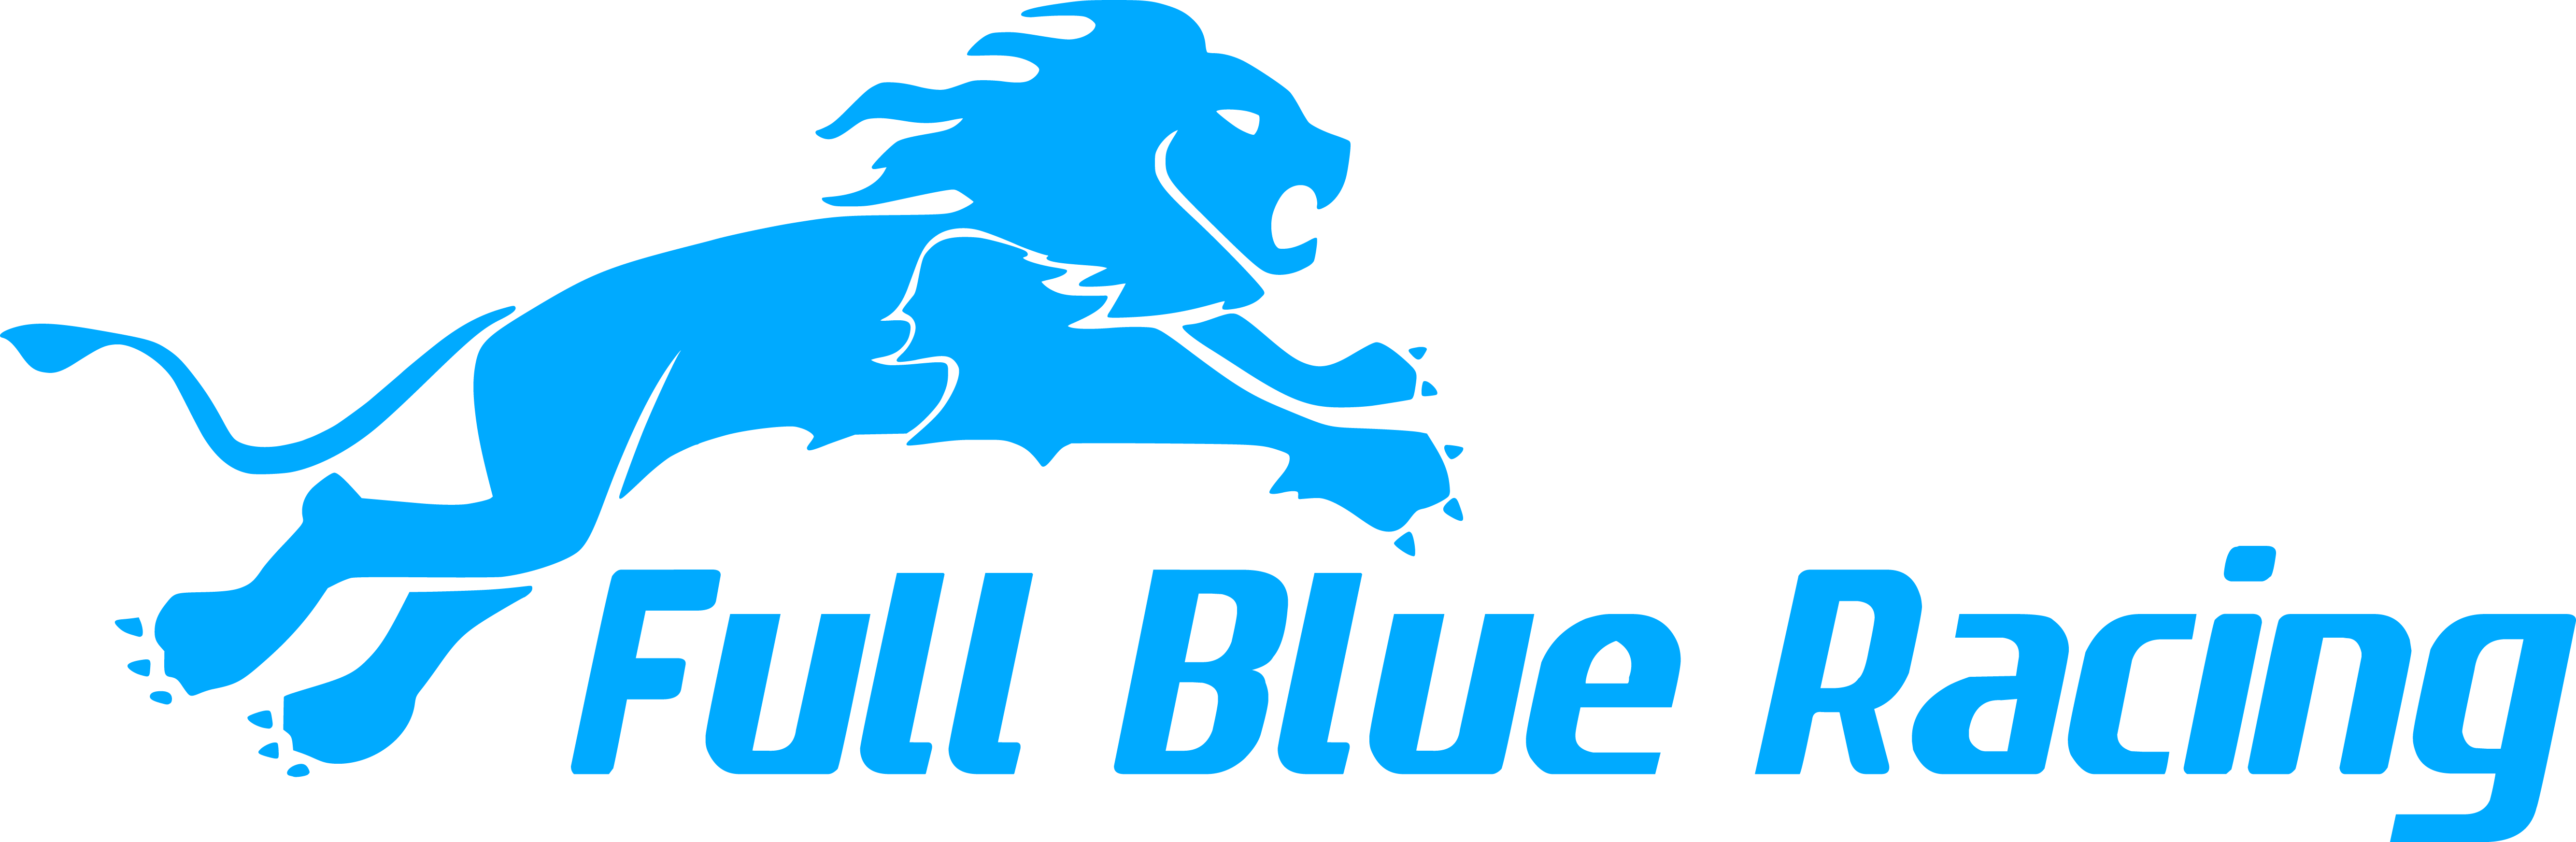 Full Blue Racing